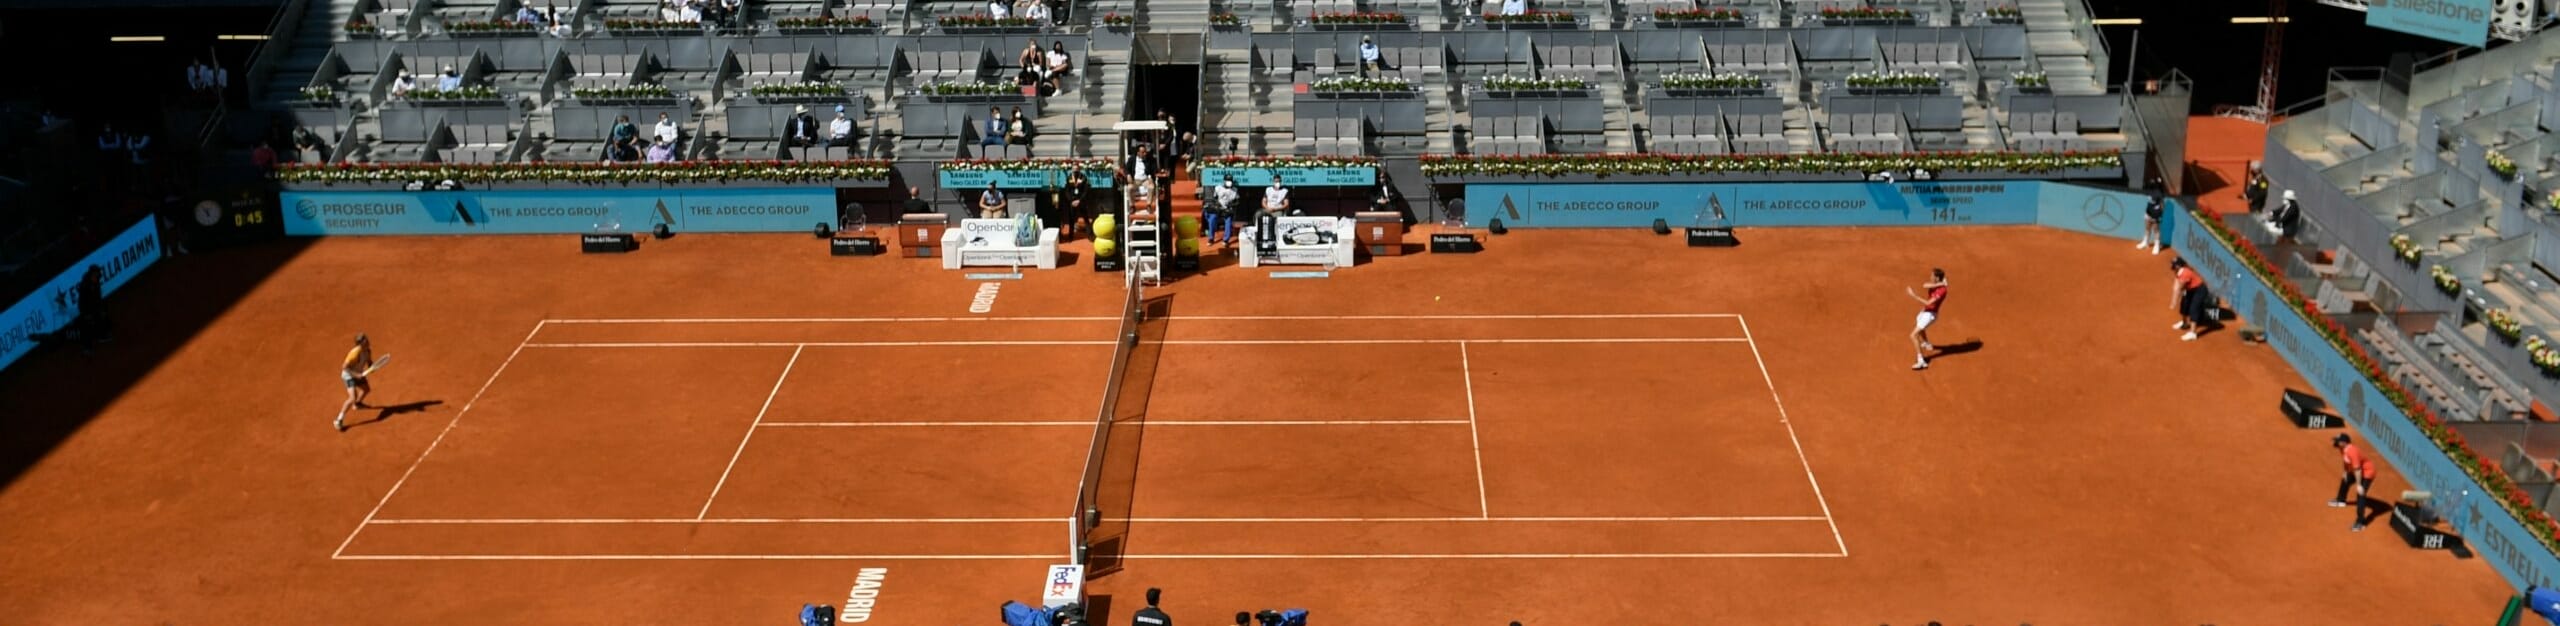 Pronostici ATP Roma: derby Mager-Sonego, per Sinner sua maestà Nadal